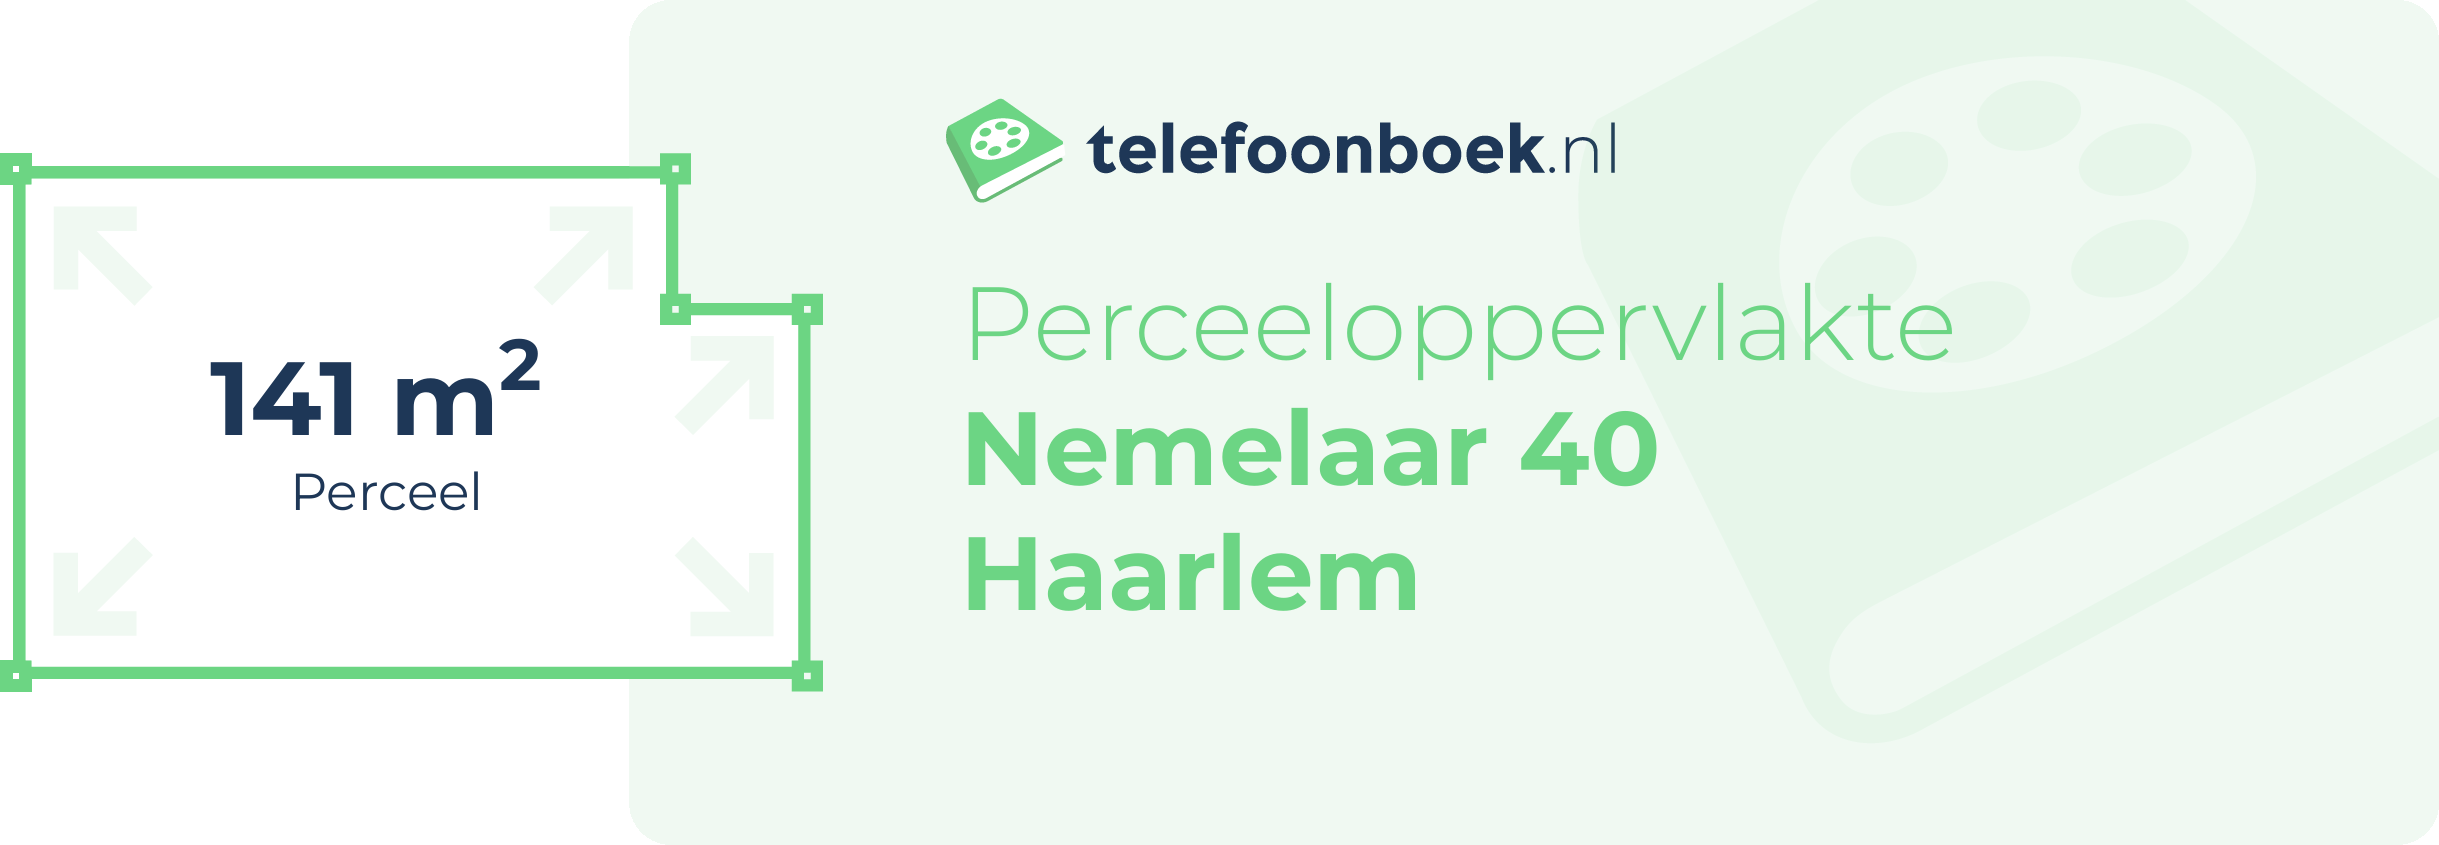 Perceeloppervlakte Nemelaar 40 Haarlem